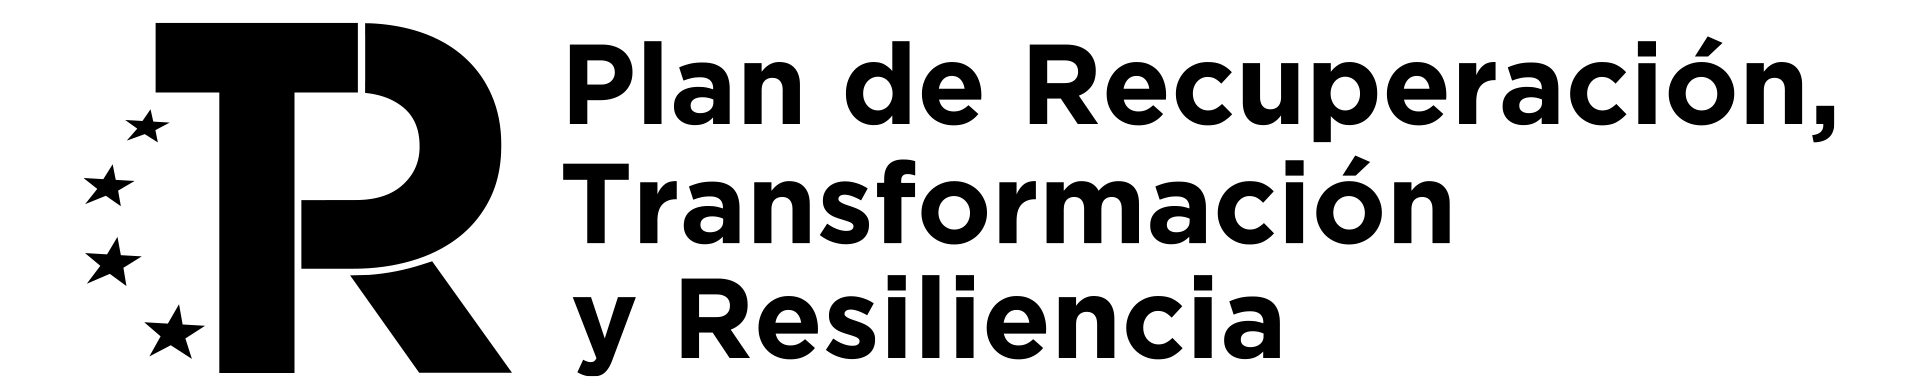 Logo PRTR tres li╠üneas_NEGRO